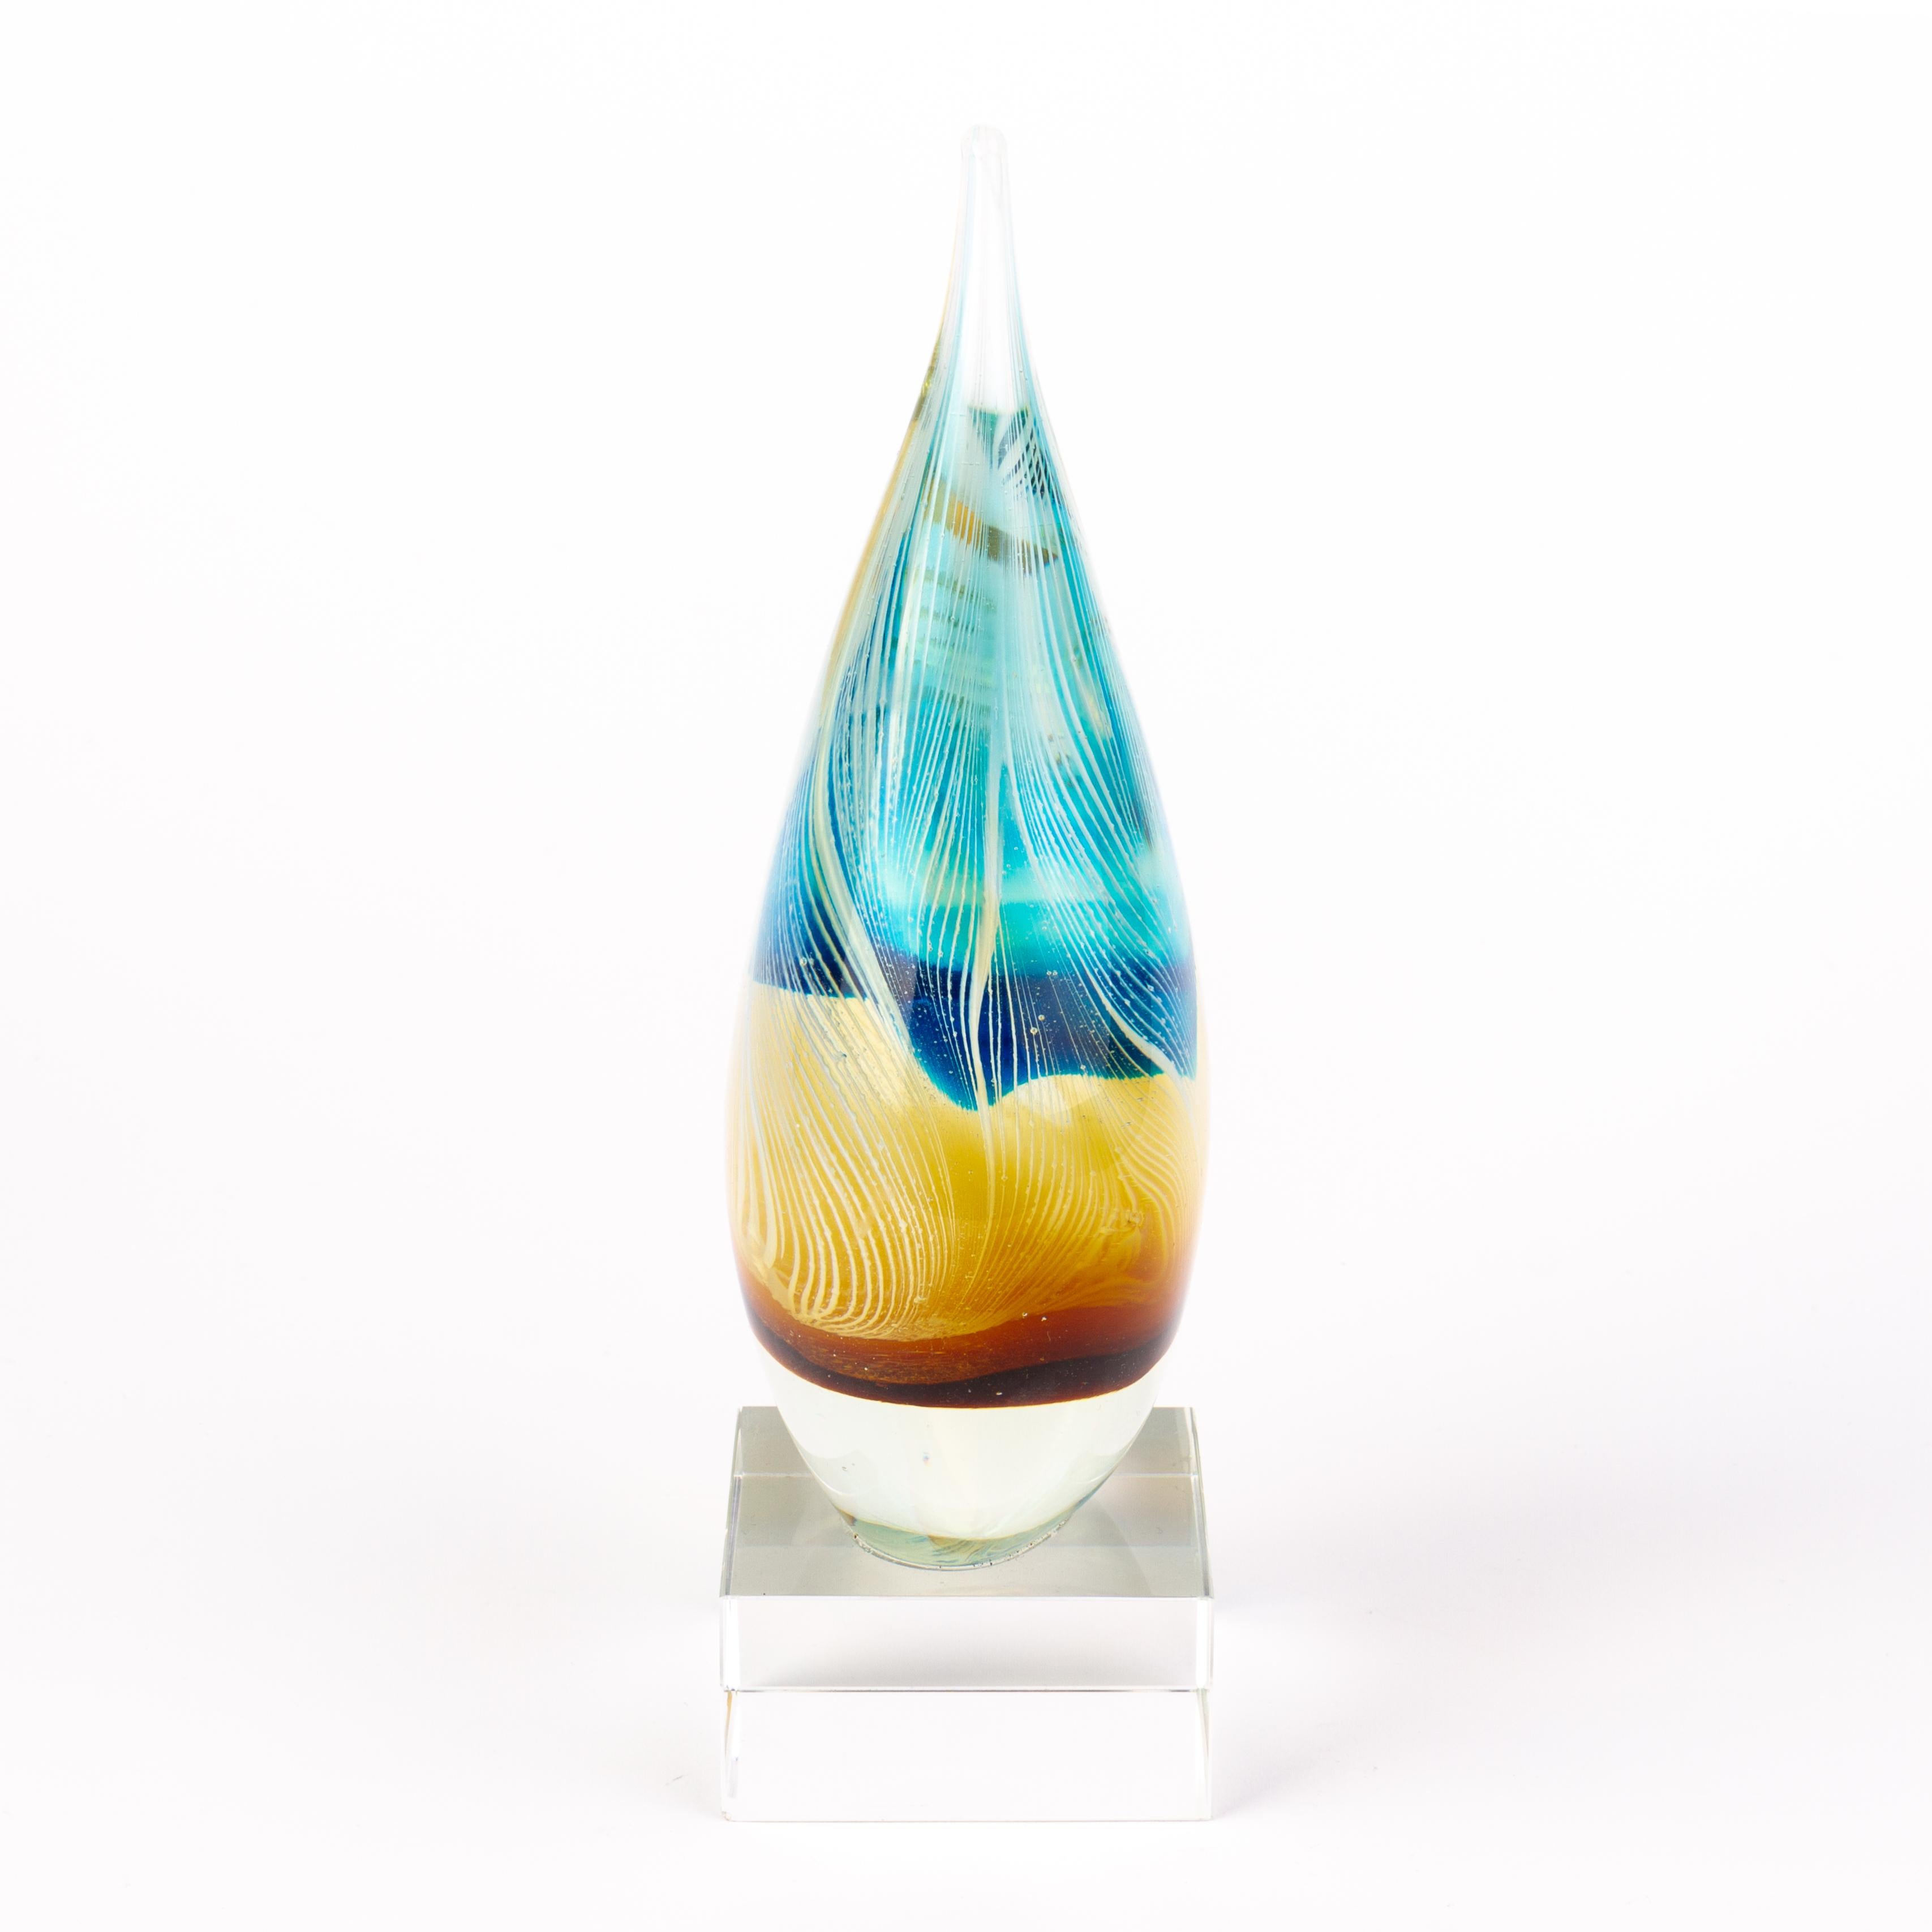 Murano Sommerso Venetian Glass Designer Sculpture 
Good condition
Free international shipping.